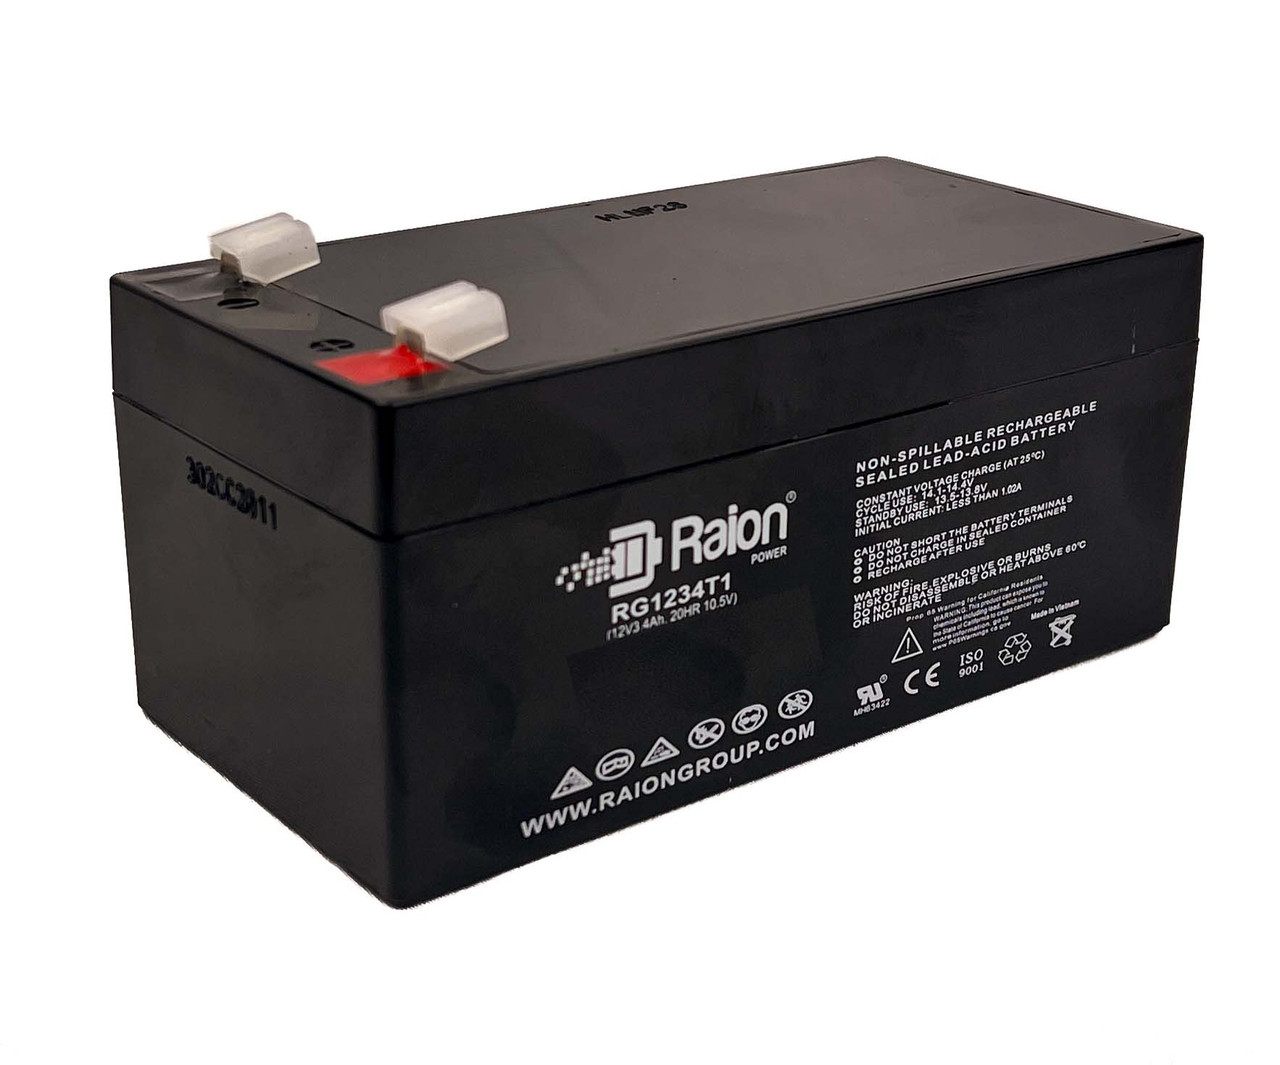 Raion Power 12V 3.4Ah Non-Spillable Replacement Battery for Energy Power EP-SLA12-3.3